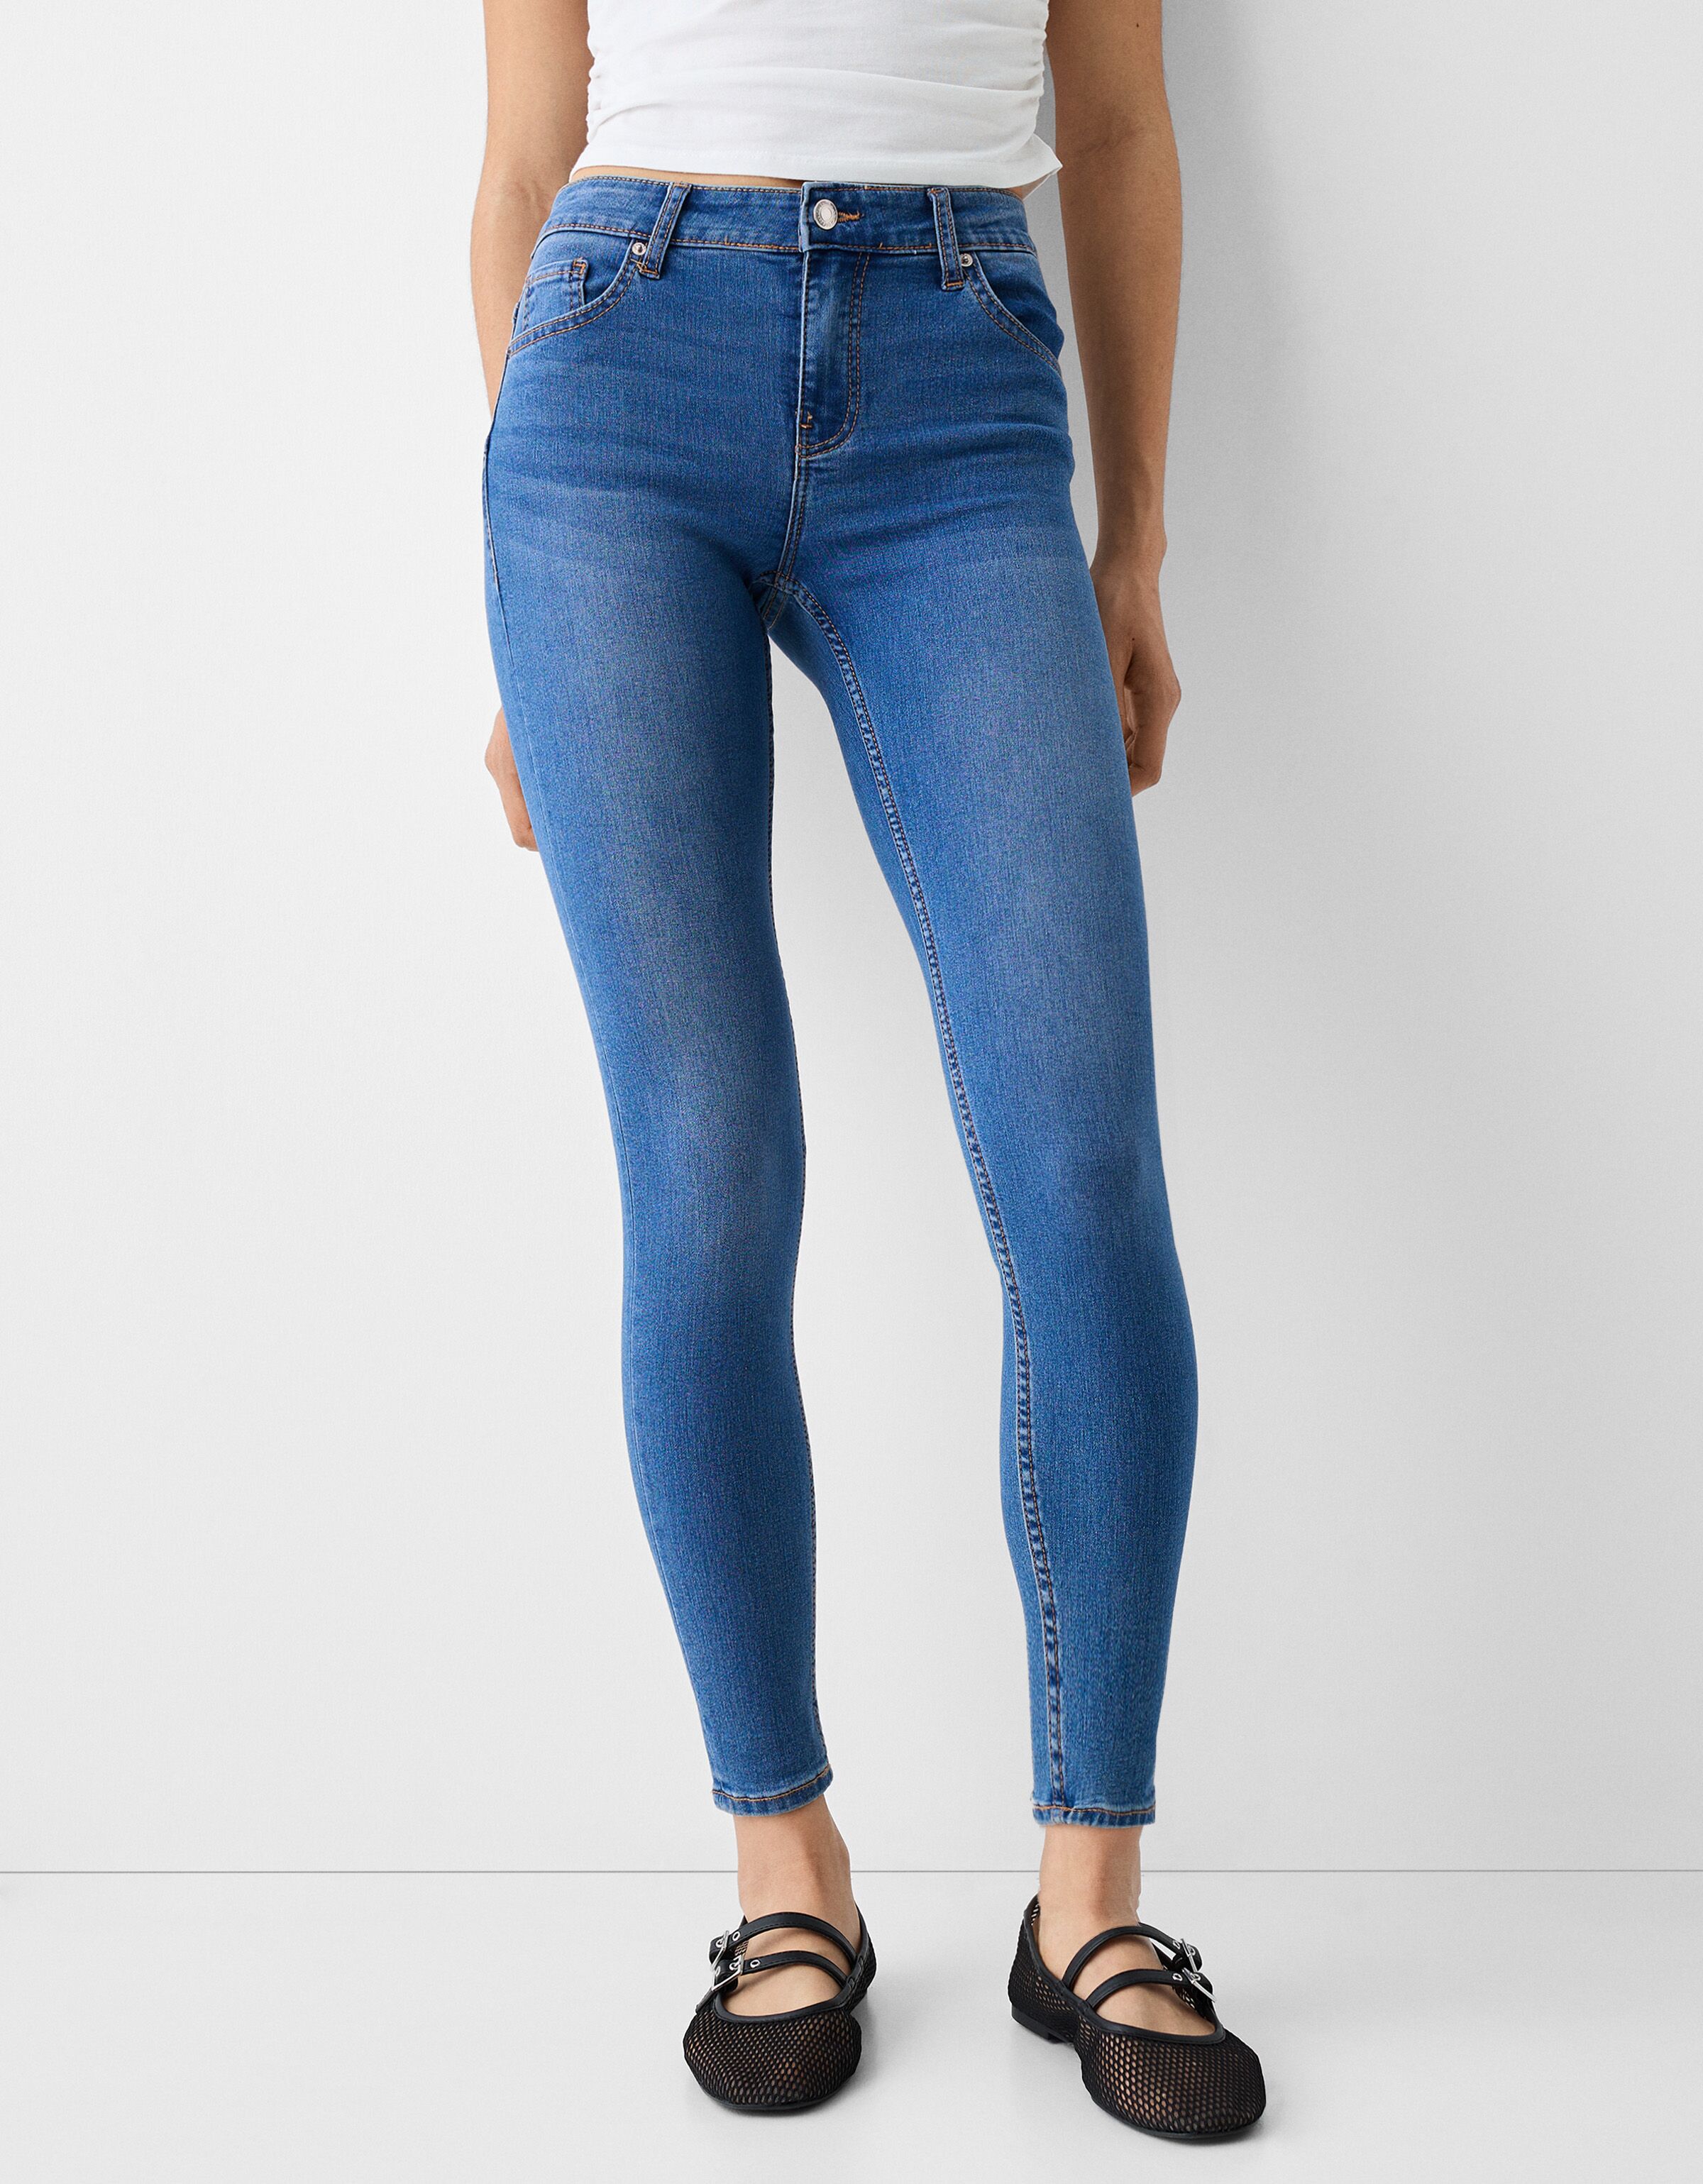 Bershka Jeans | Mercari